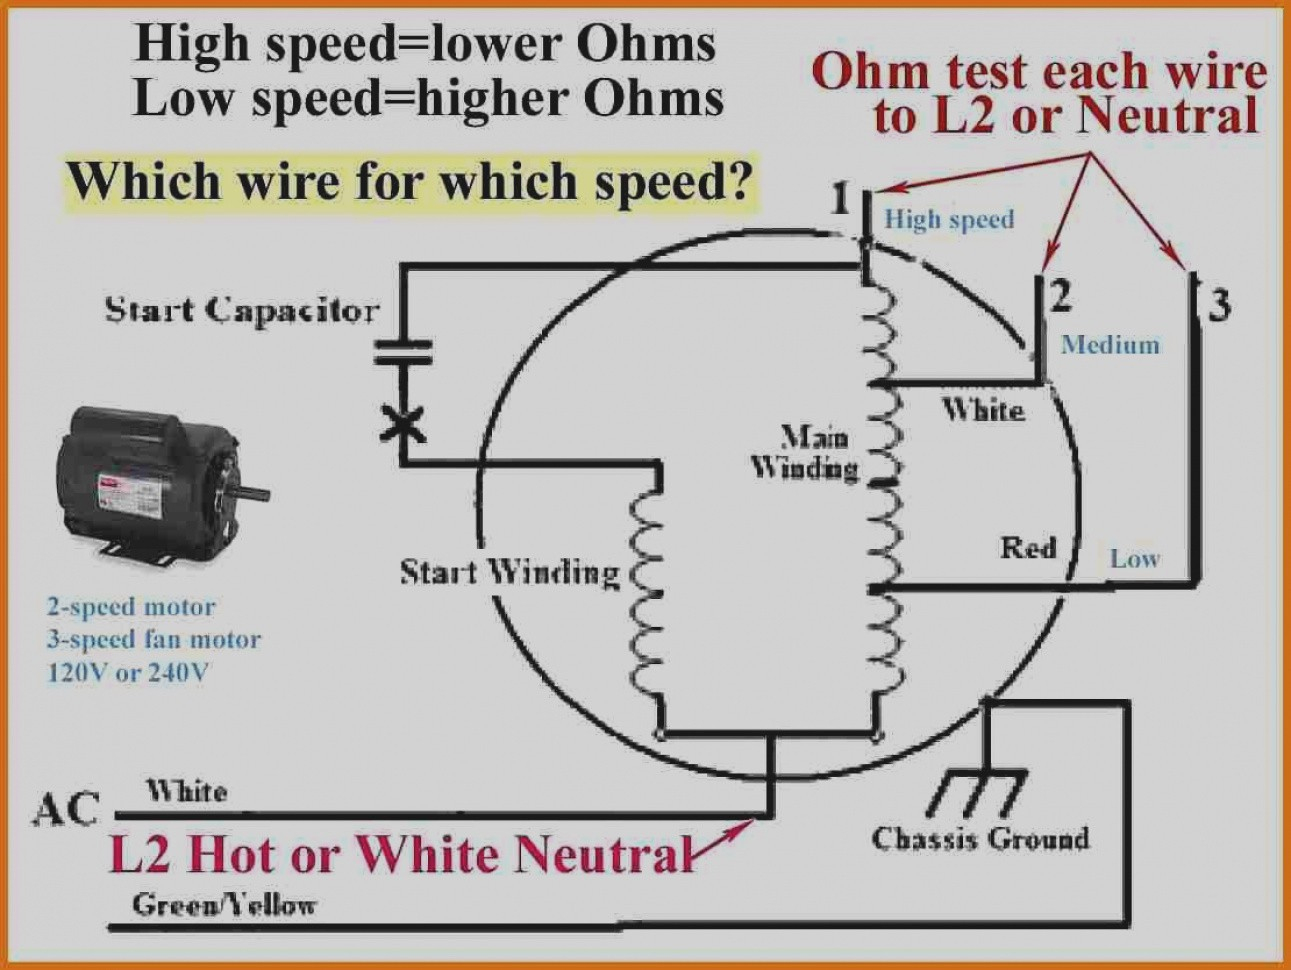 4 Wire 240V Schematic Diagram | Wiring Library - 4 Wire Motor Wiring Diagram